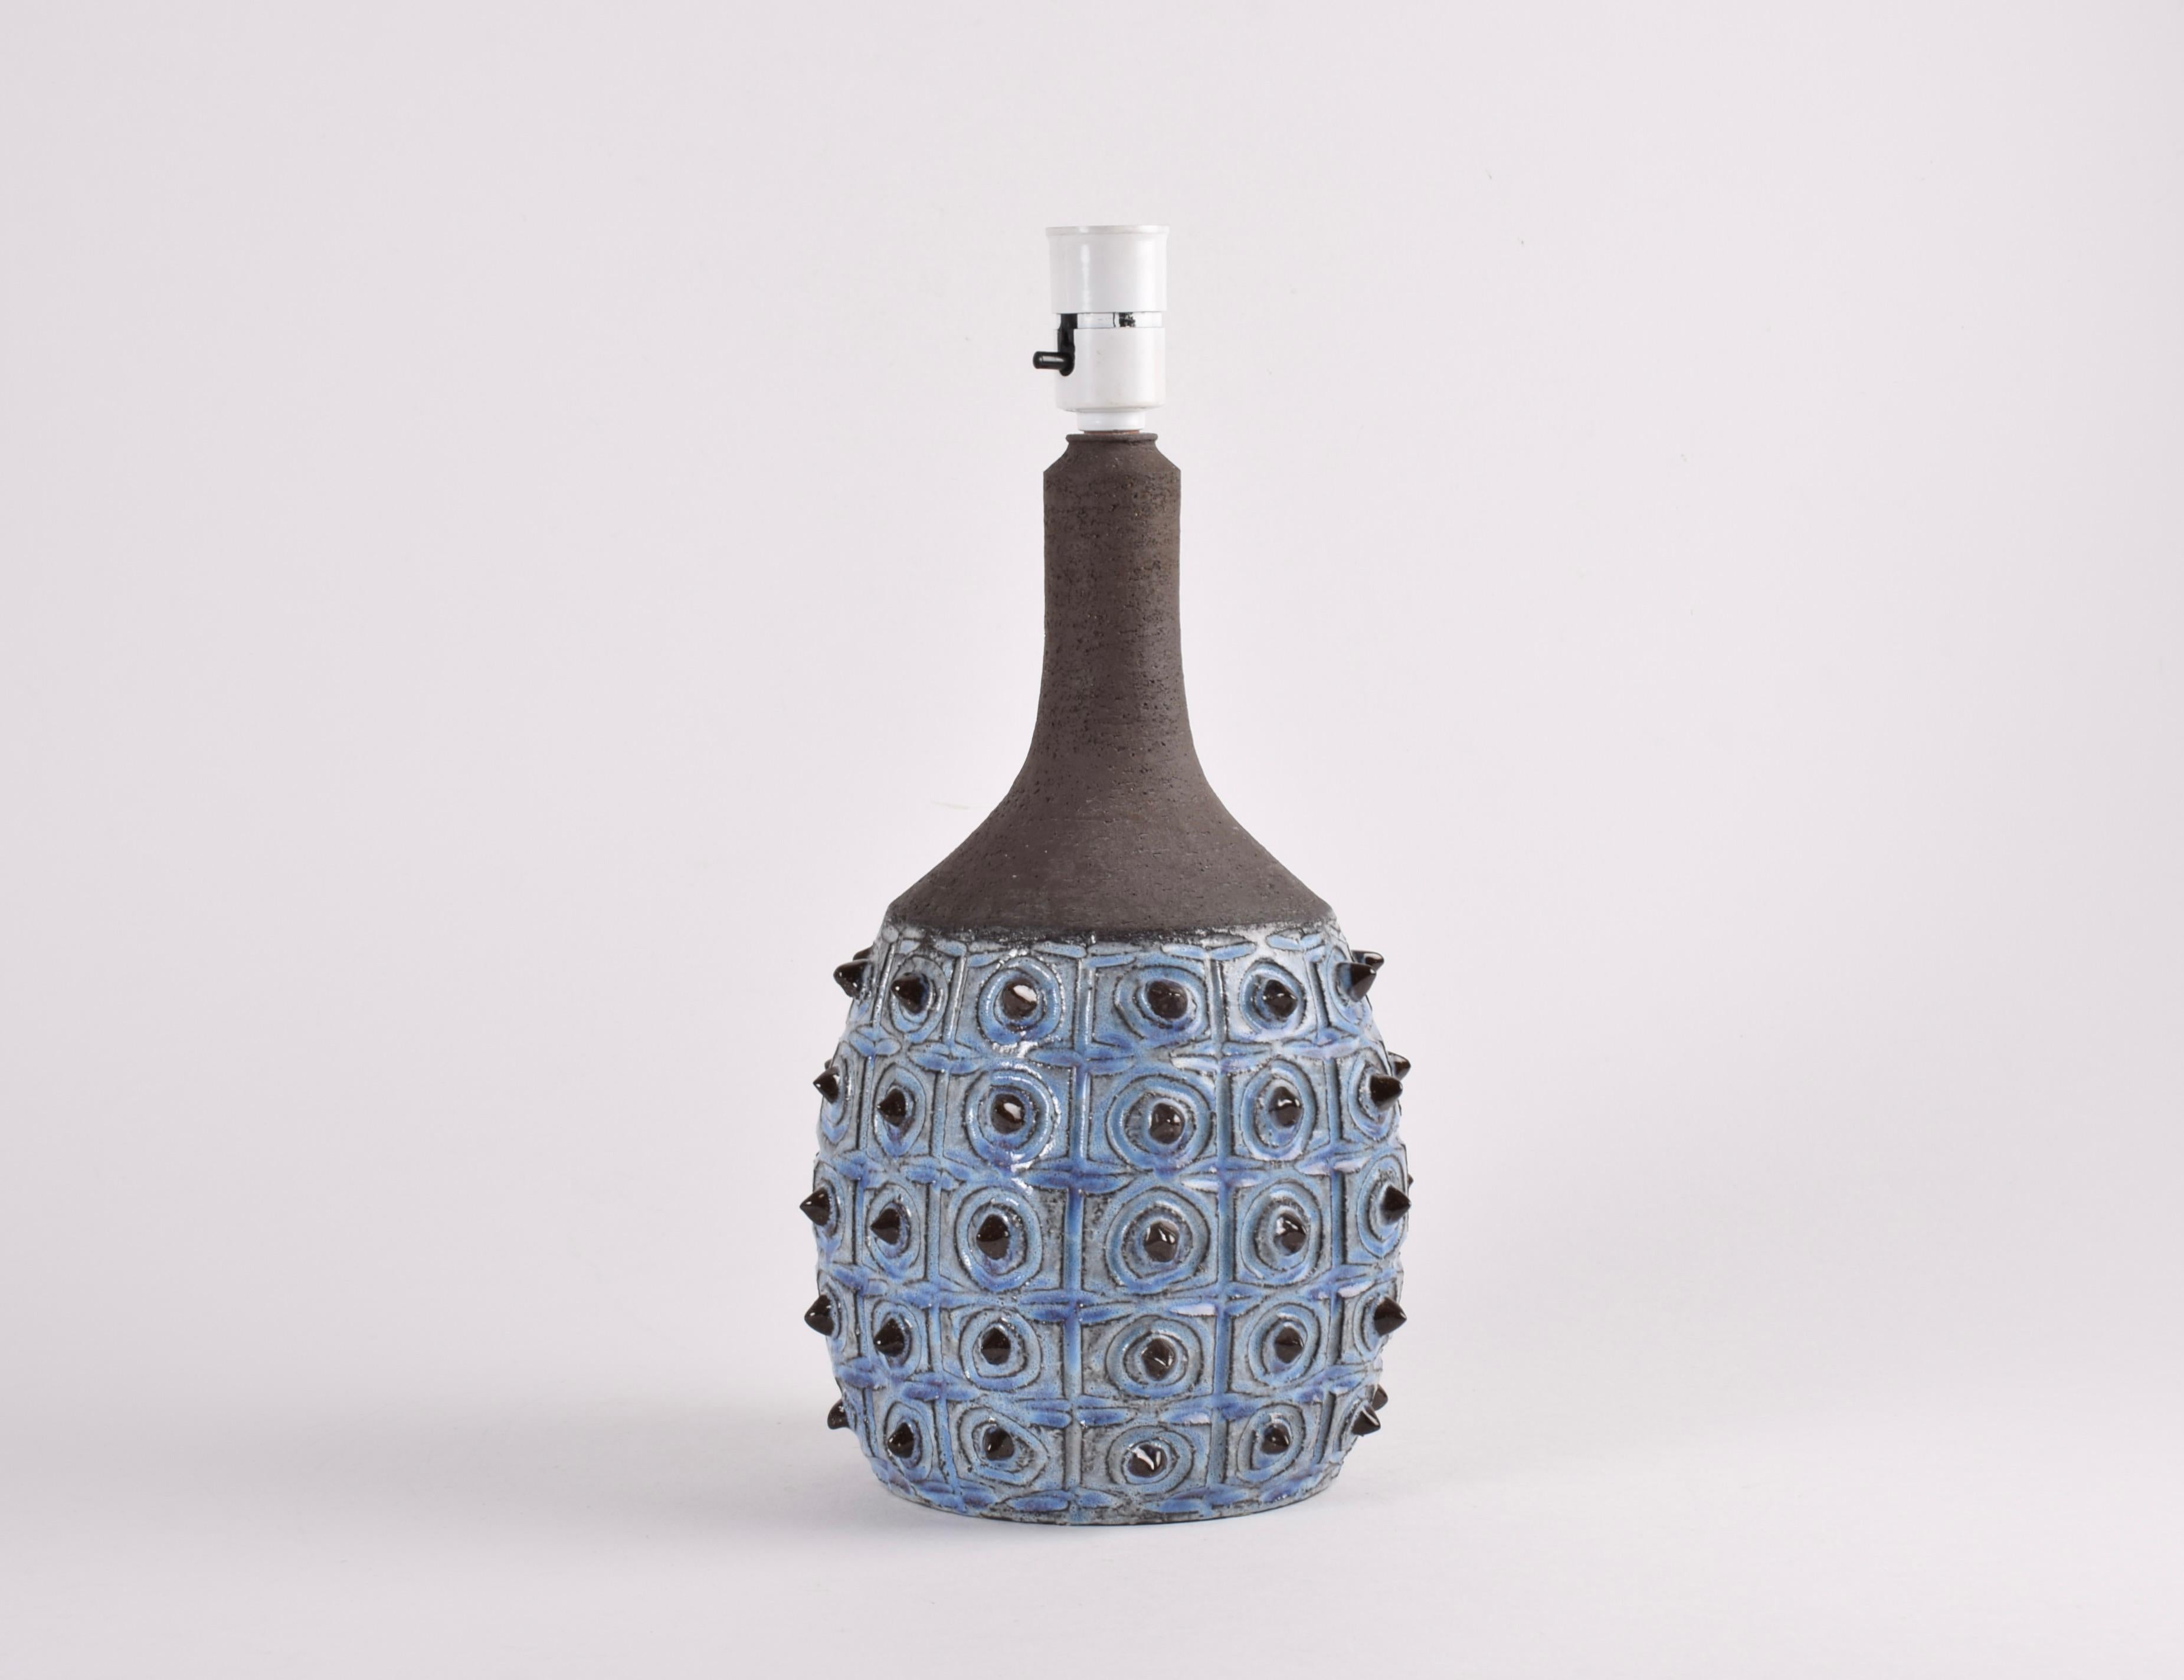 Glazed Danish Tall Sculptural Table Lamp Blue & Brown by Jette Hellerøe, Ceramic 1970s For Sale